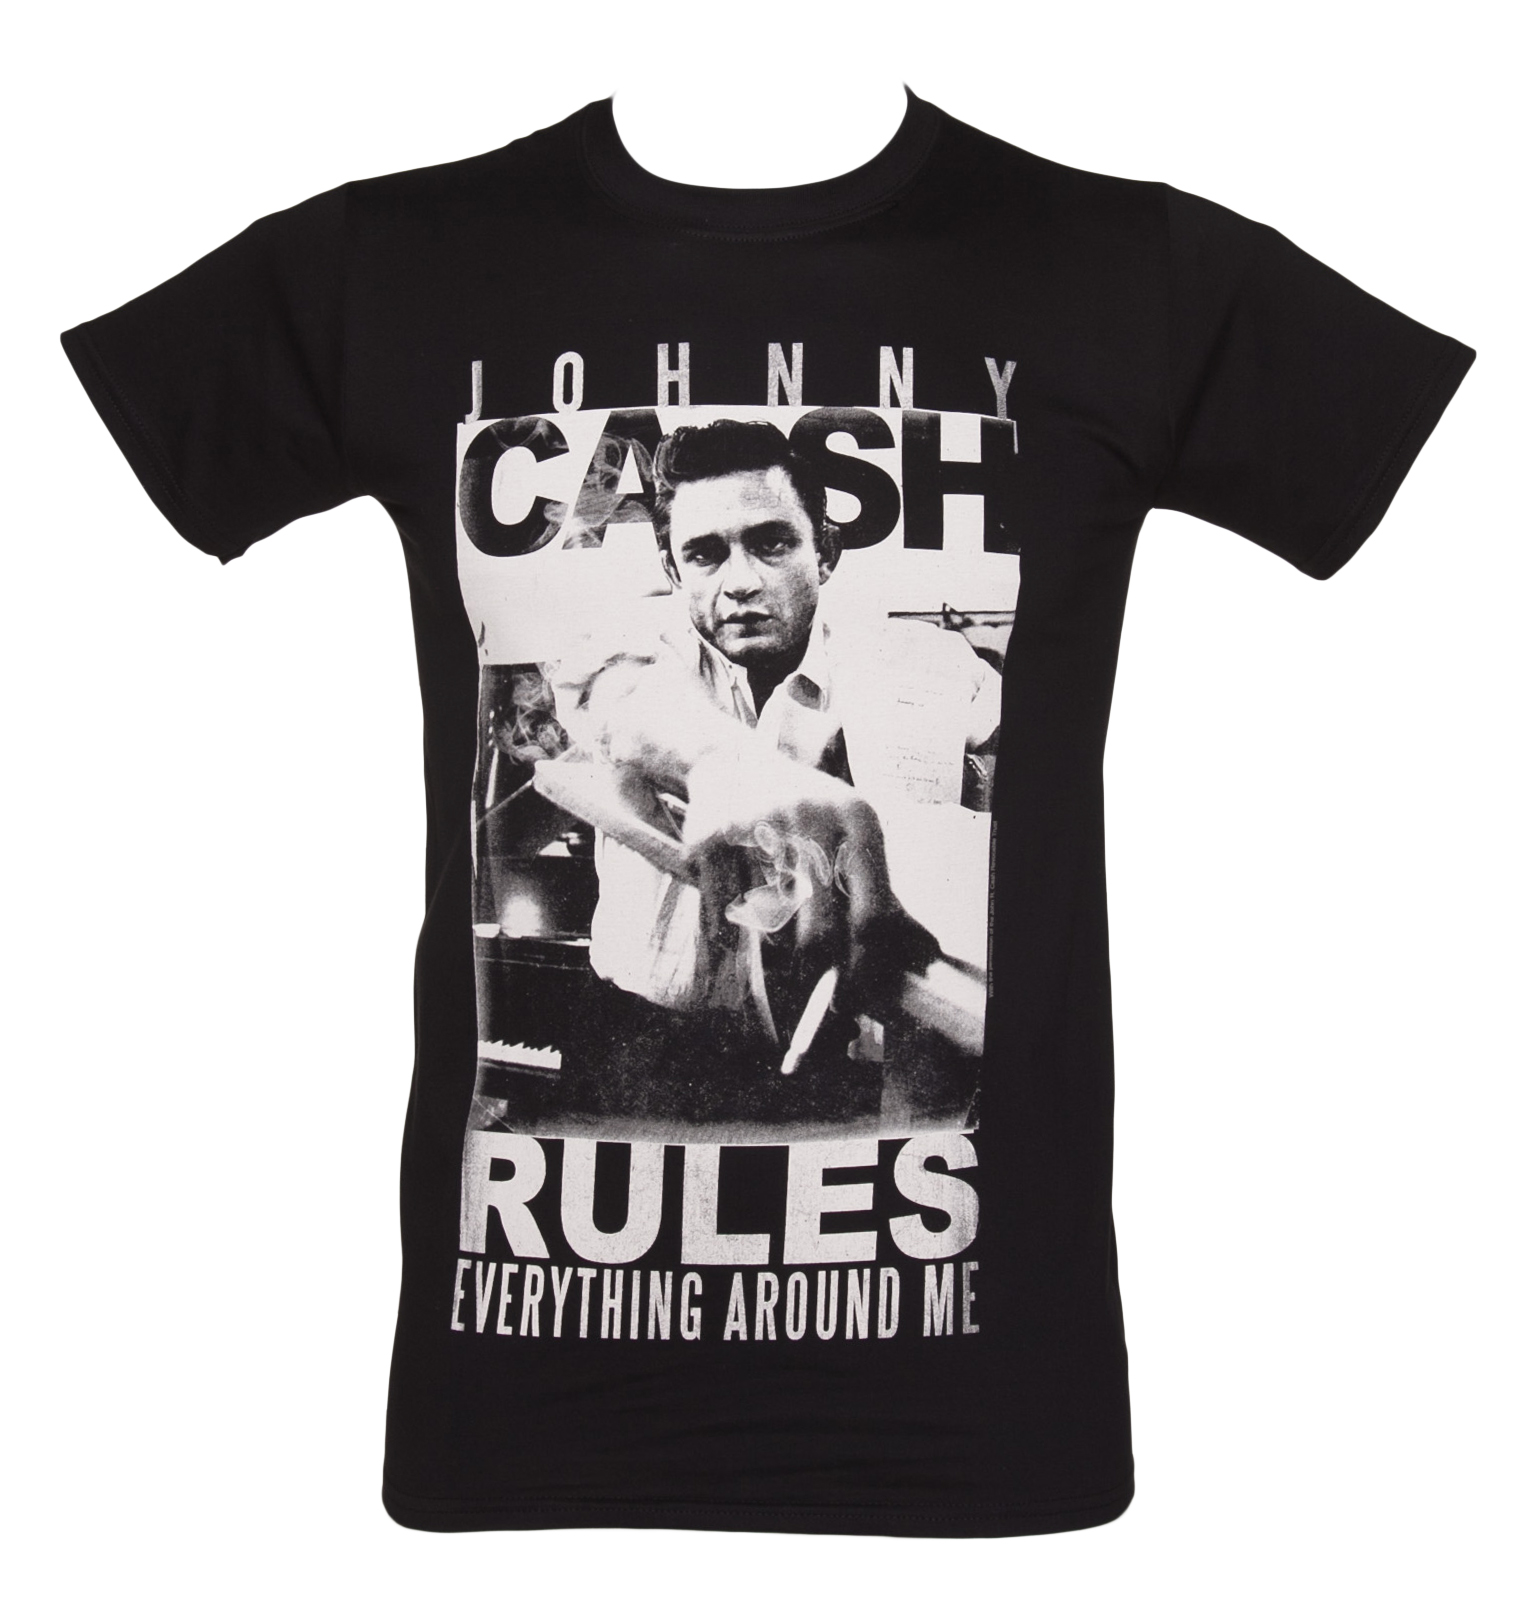 Johnny Cash Rules T-Shirt